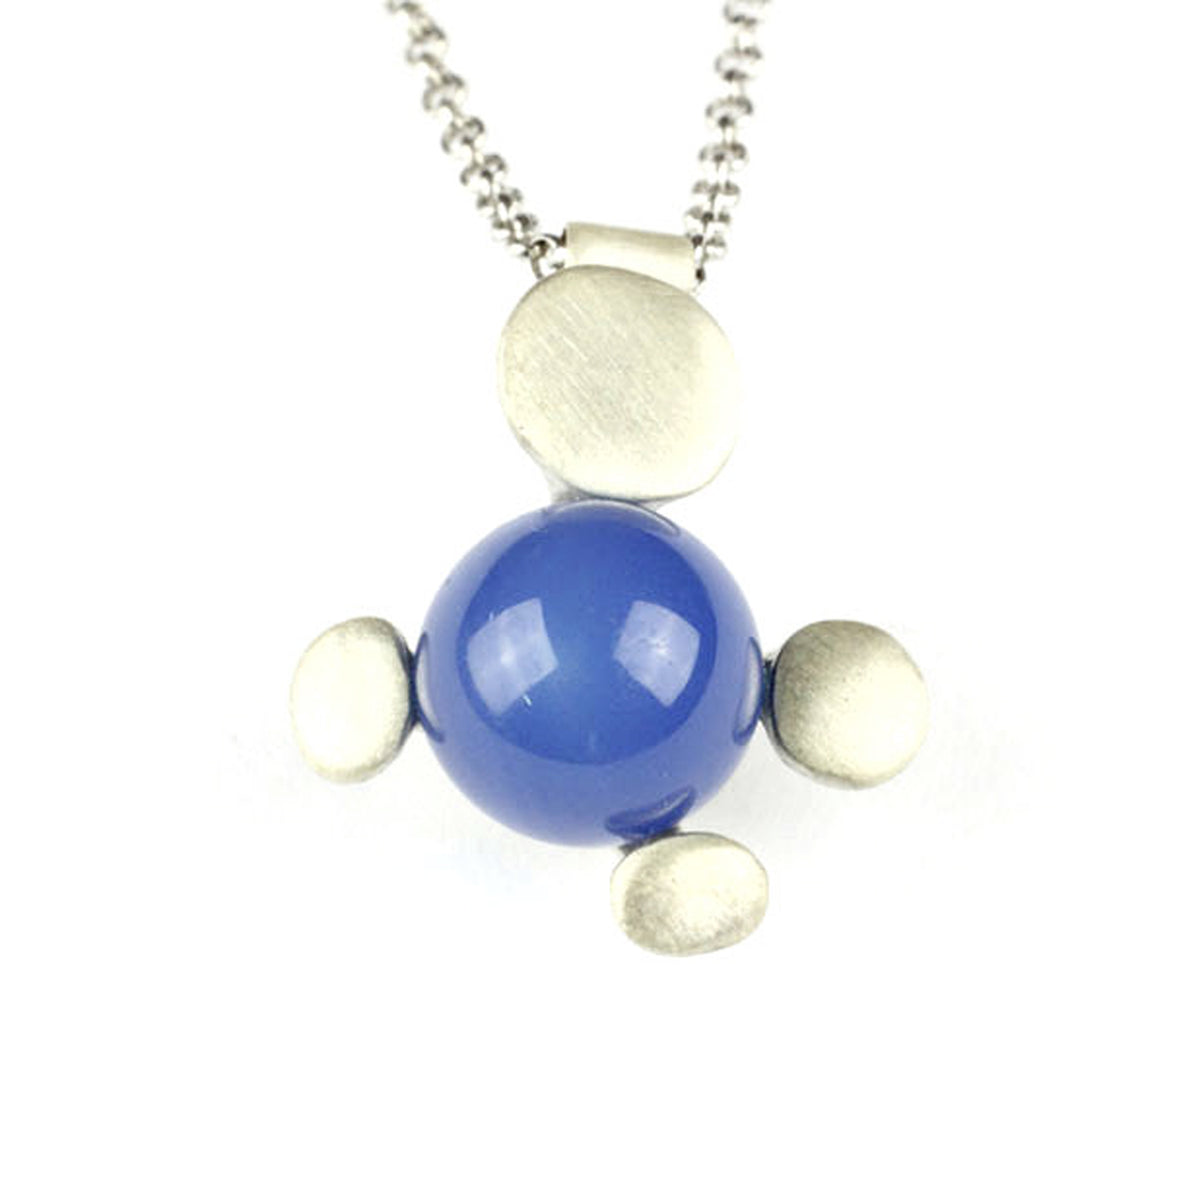 Snorky agate blue pendant